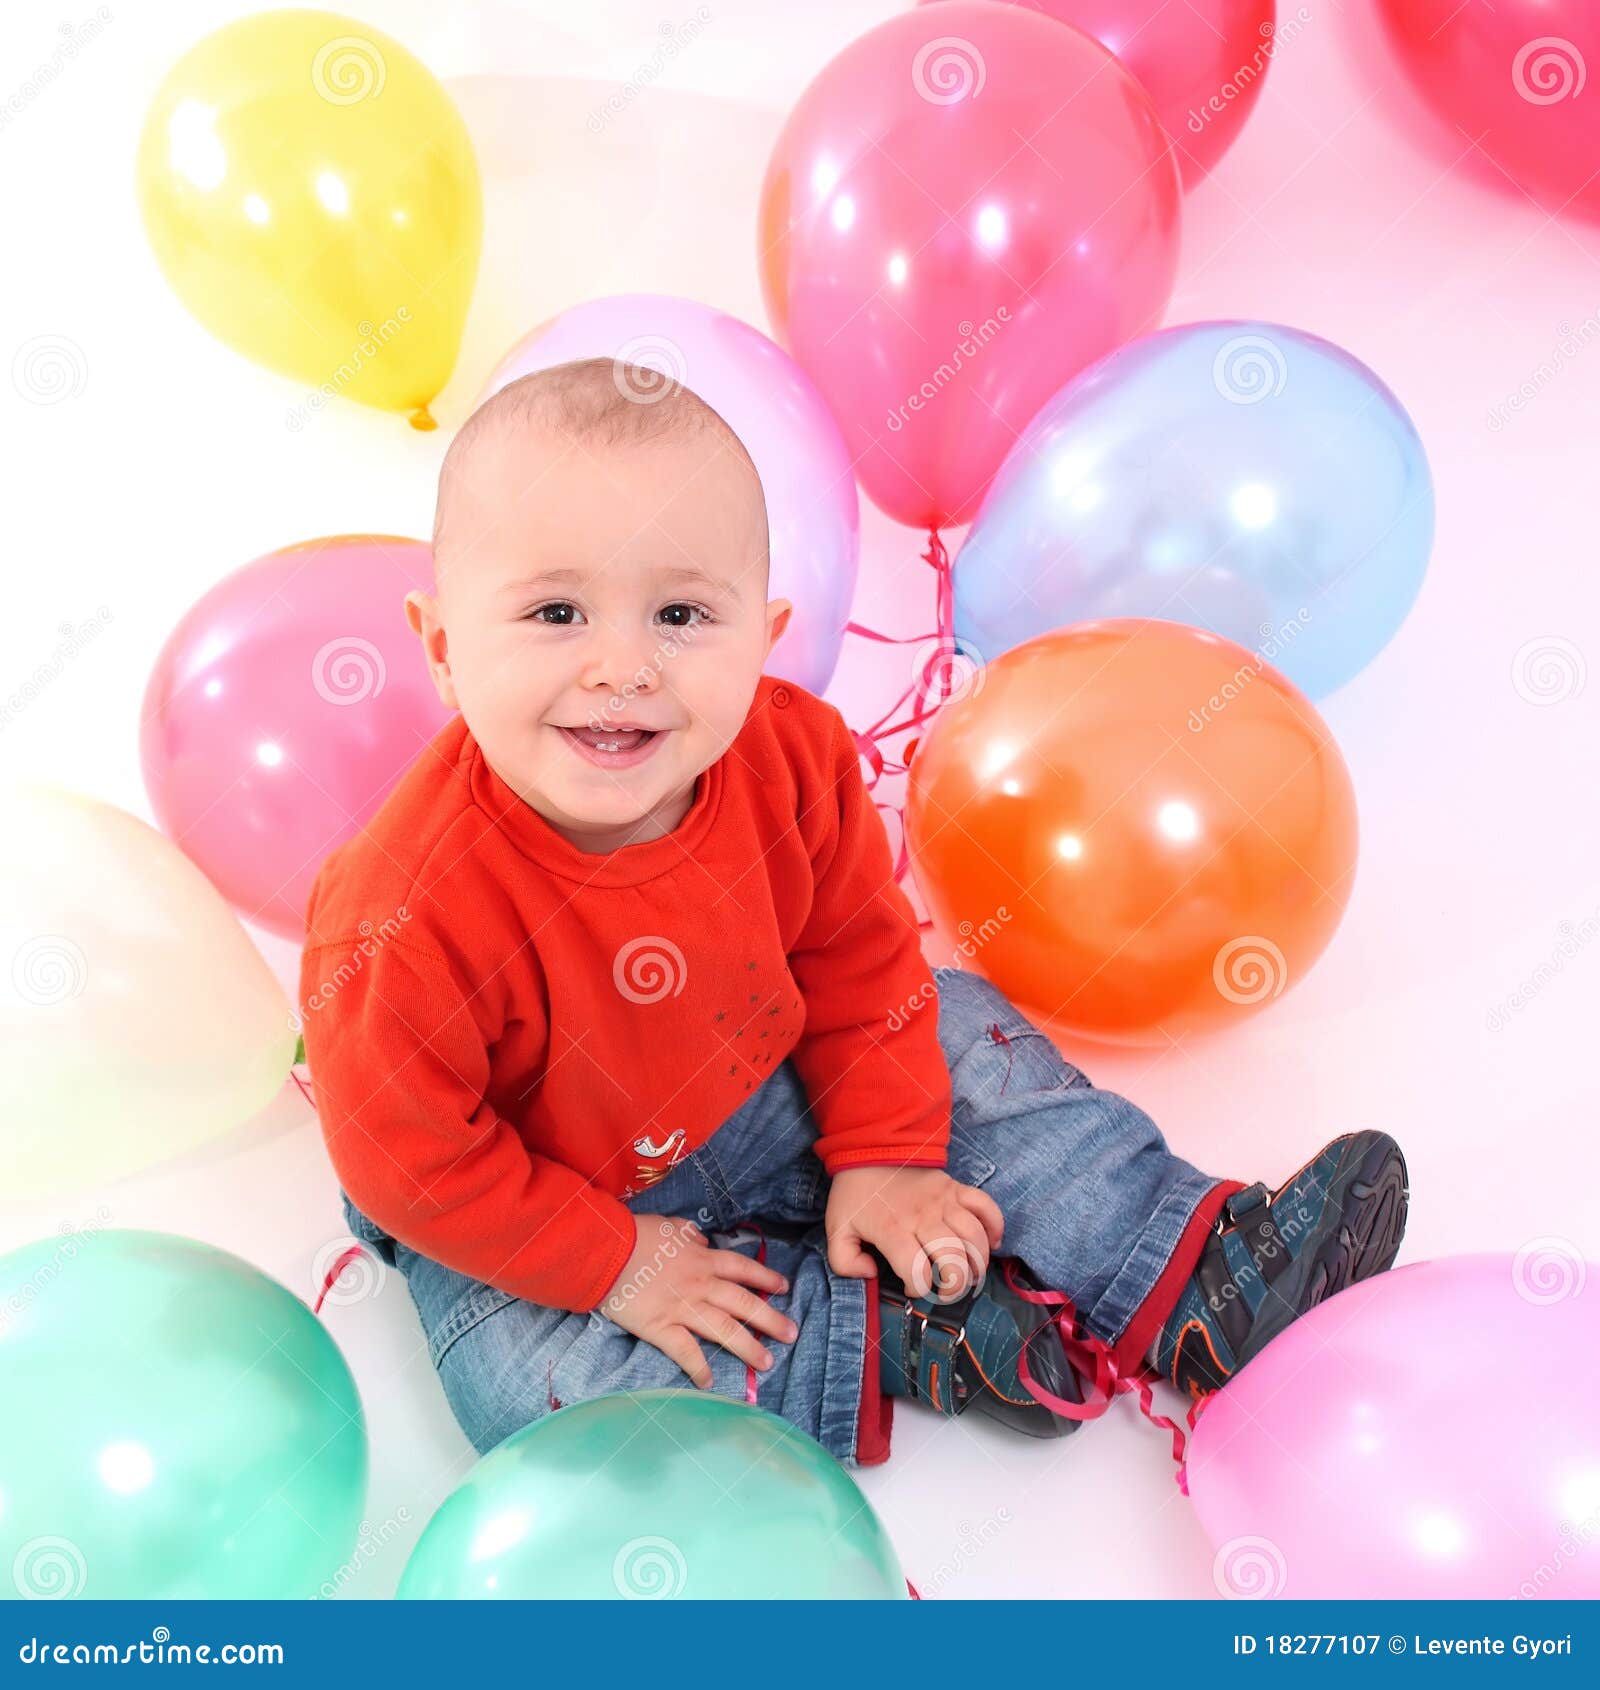 Egyptische molen Koloniaal Baby with balloons stock image. Image of laugh, balloon - 18277107